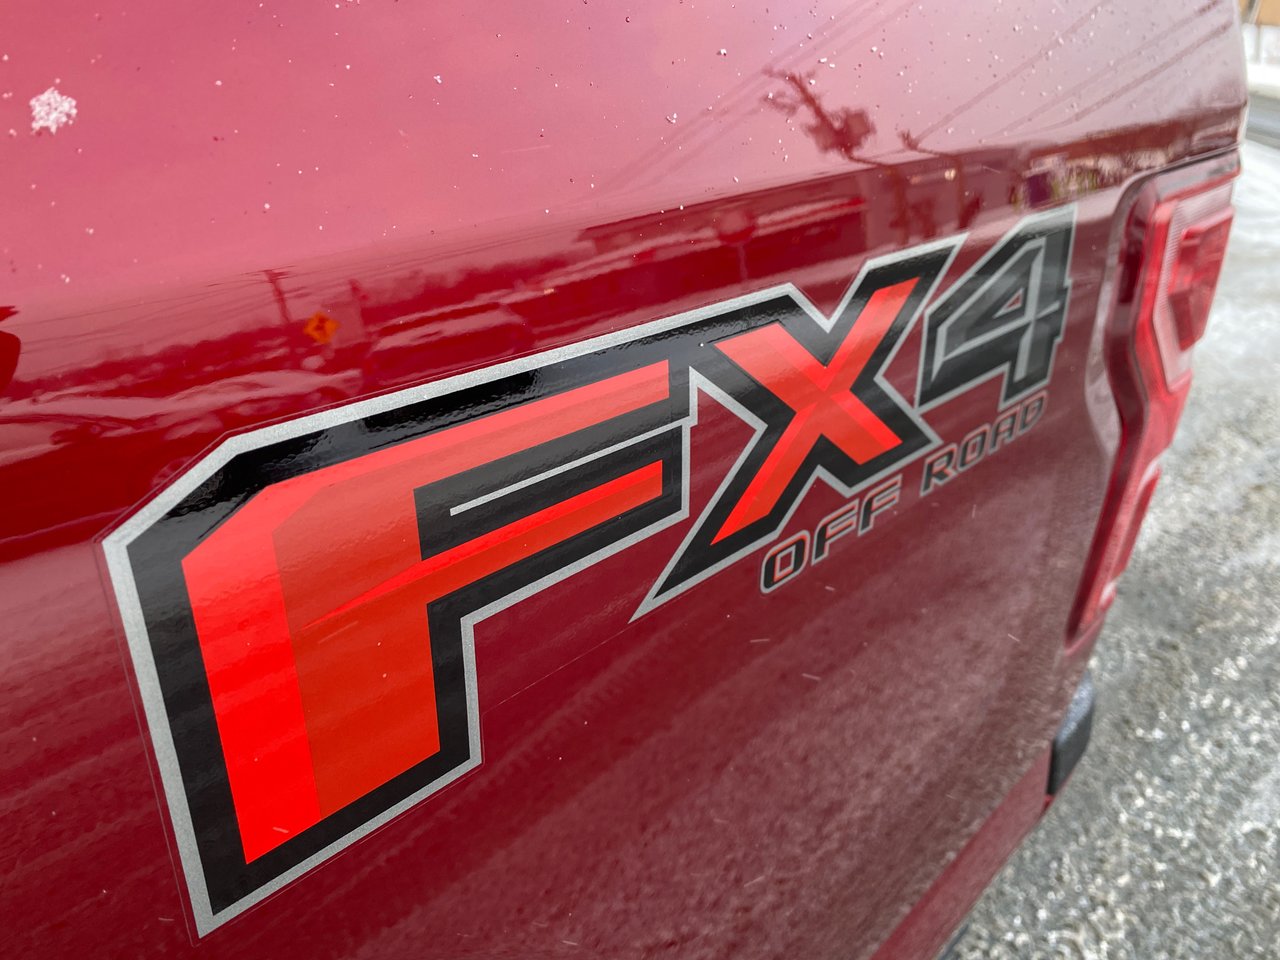 2019 Ford F-150 XLT FX4